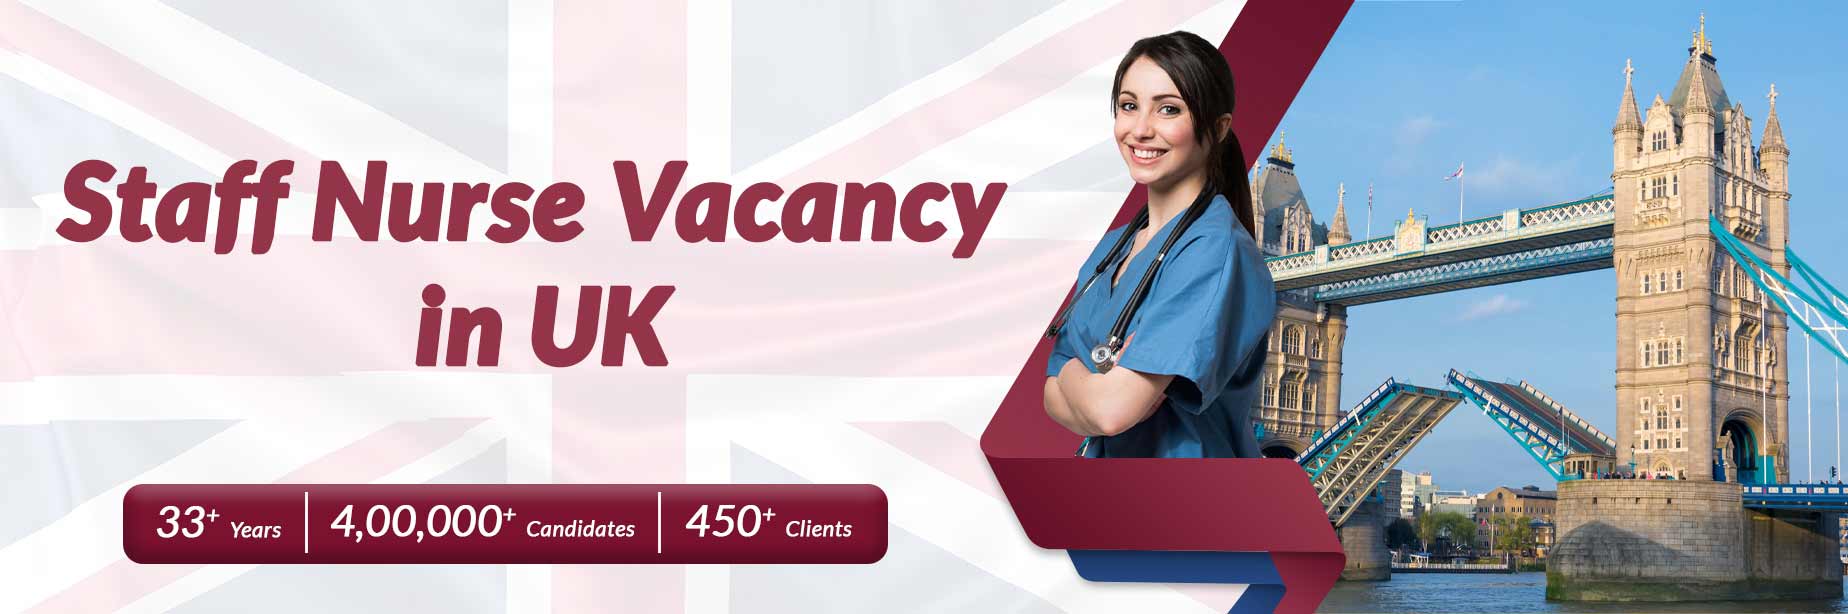 Staff Nurse Vacancy in UK